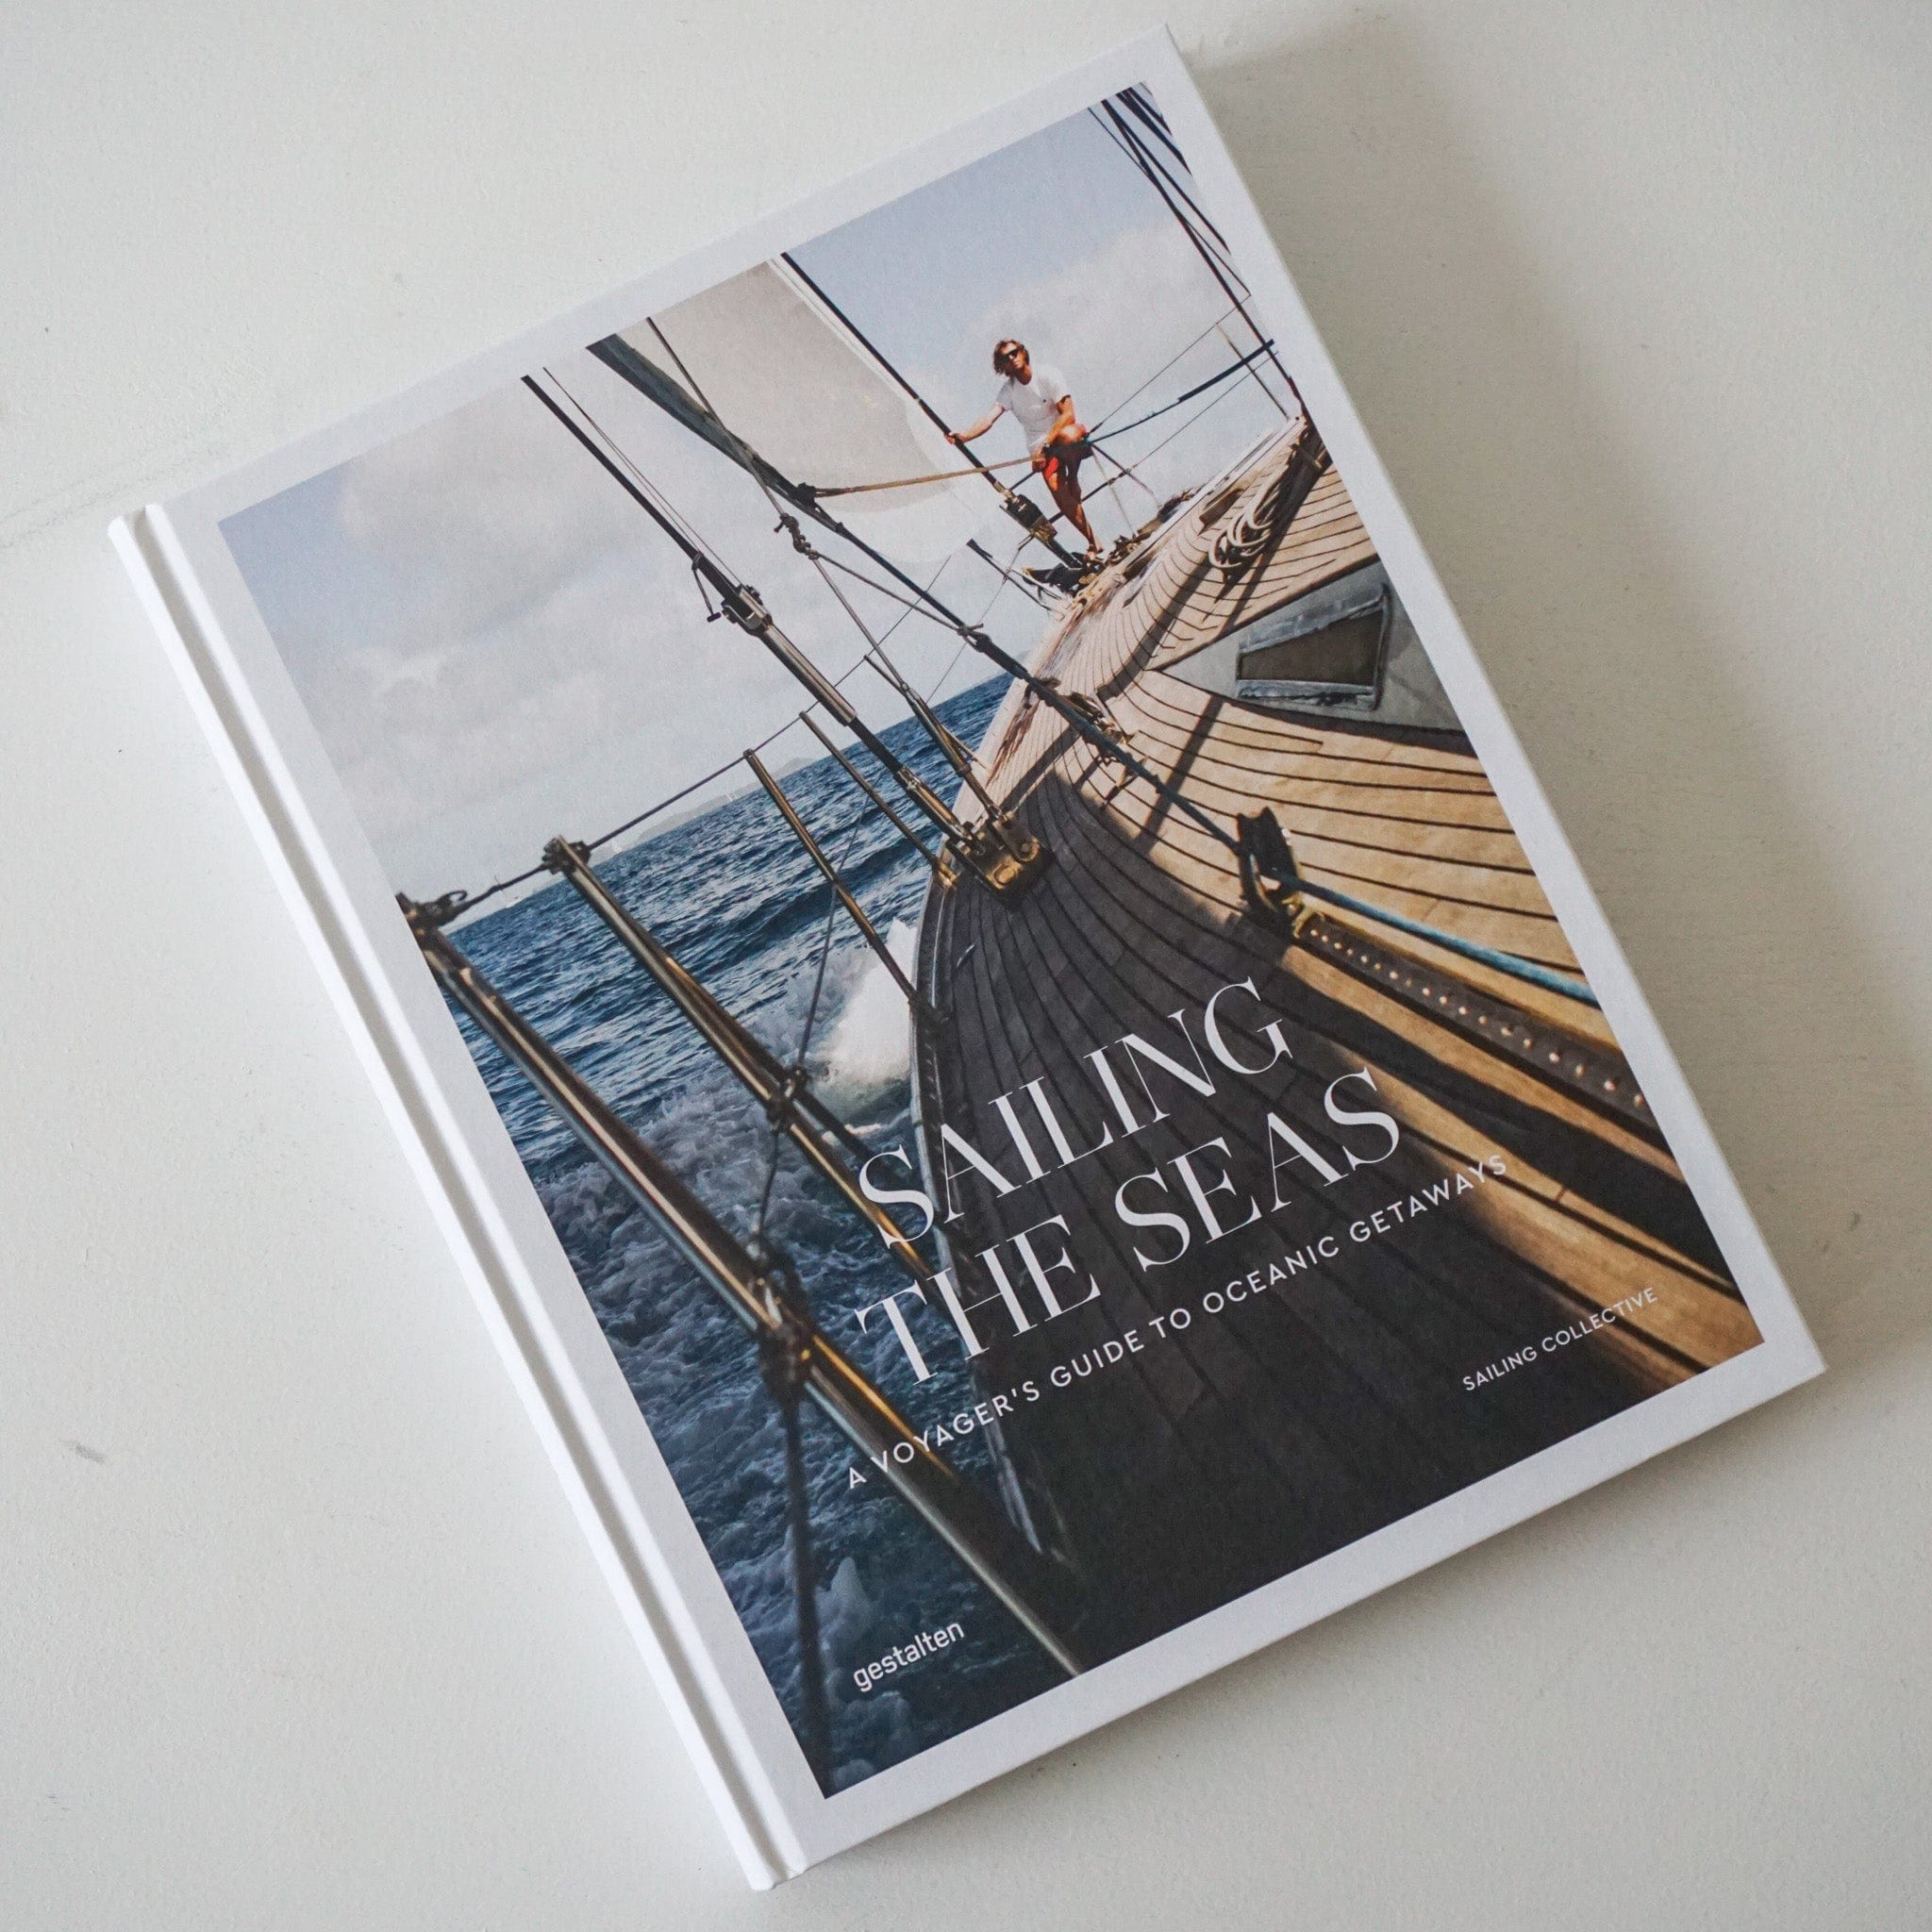 Gestalten Books Sailing the Seas